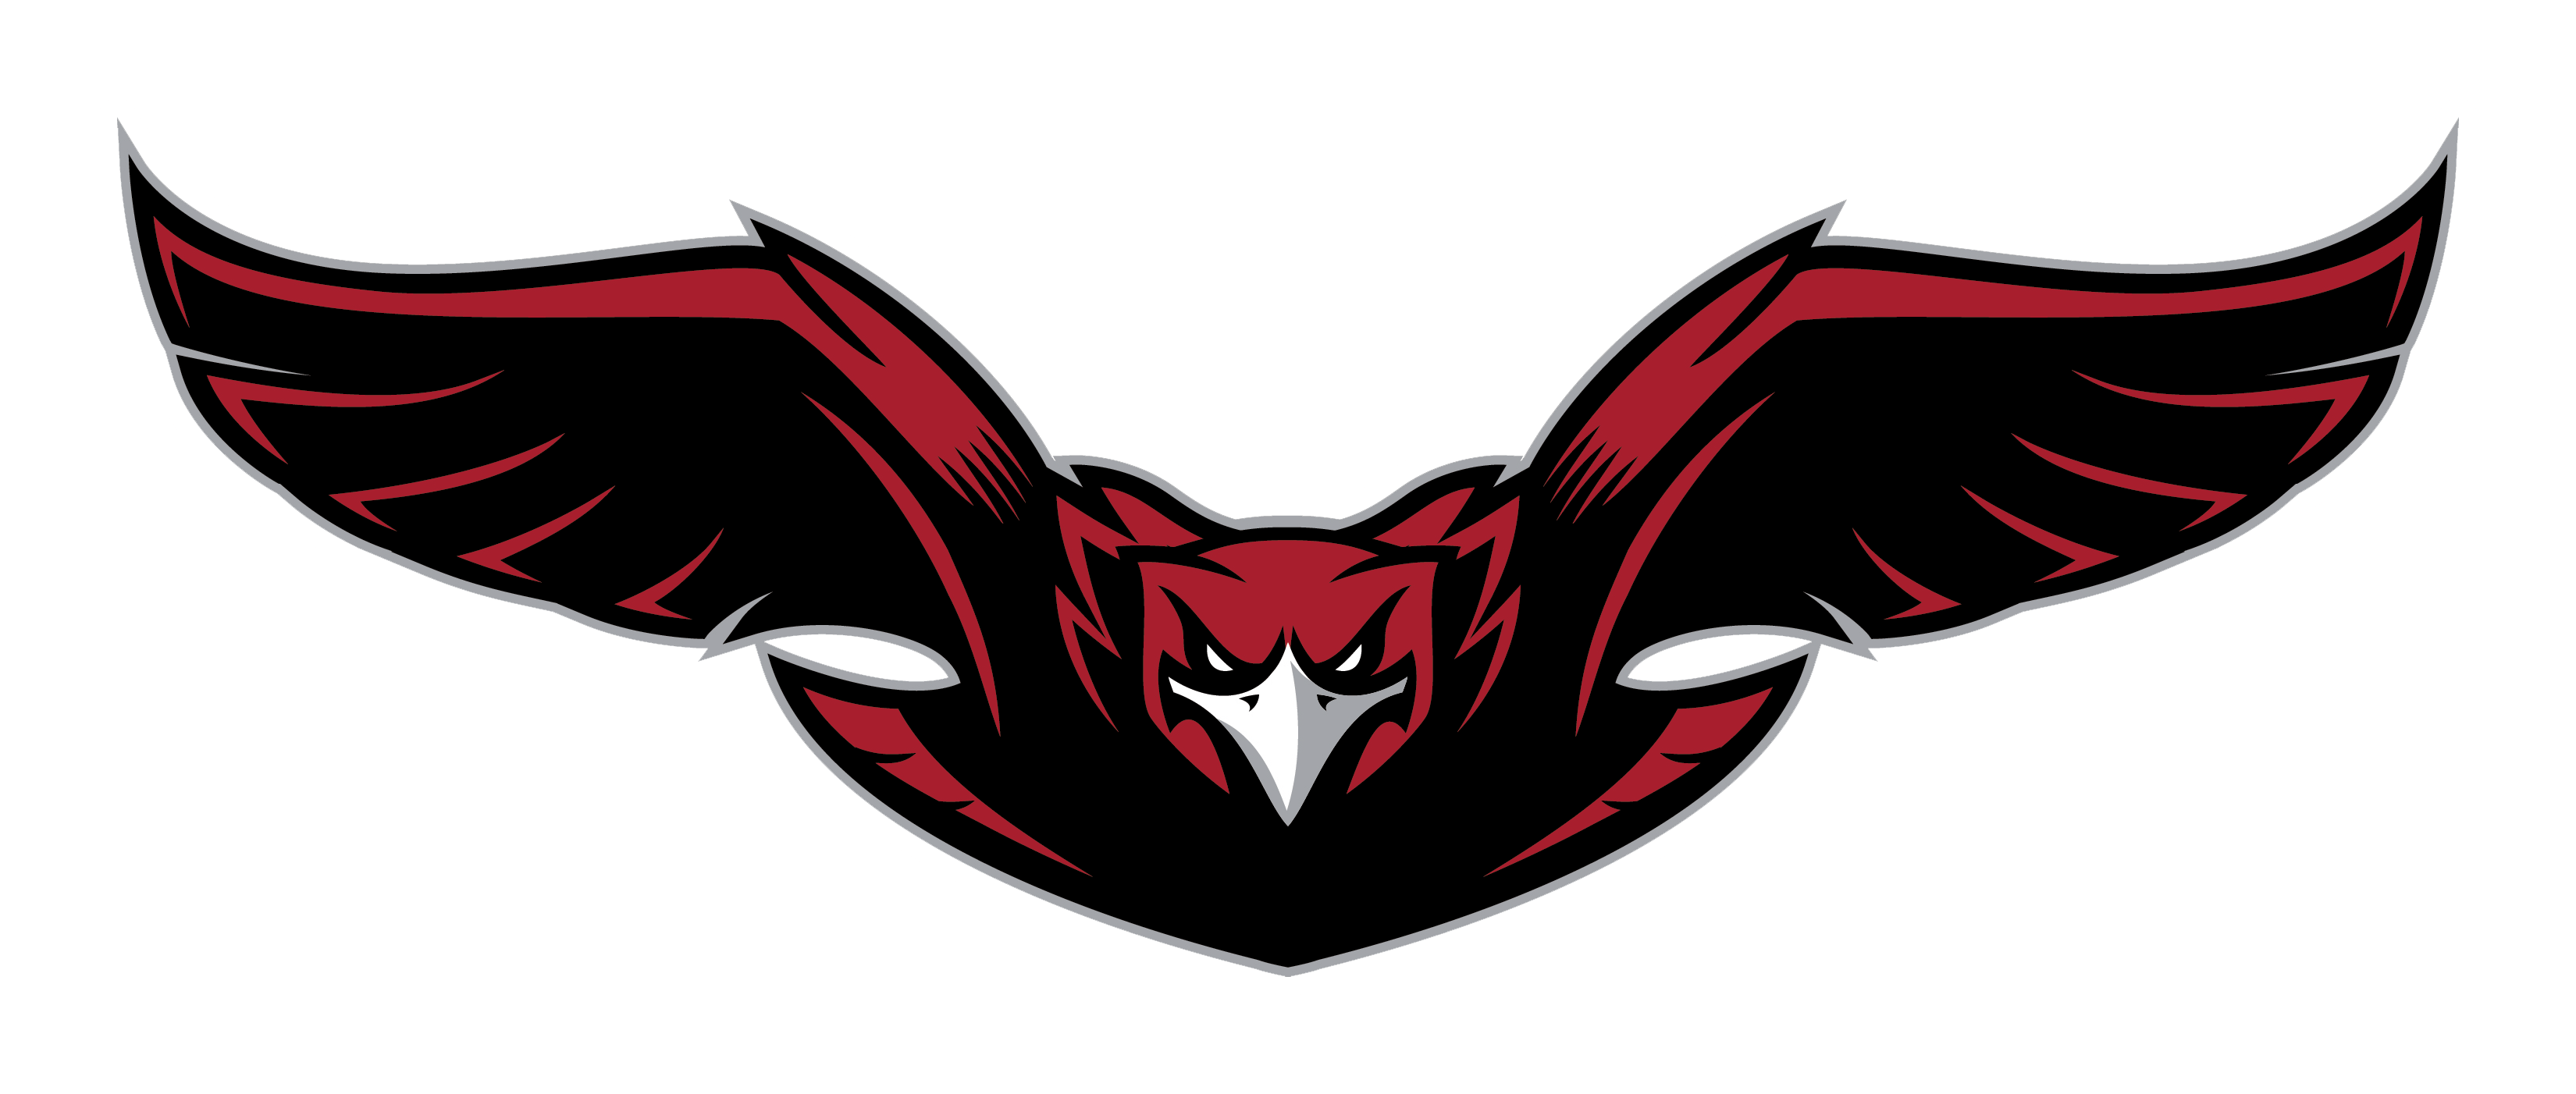 RedHawks Logo - Redhawks Logos